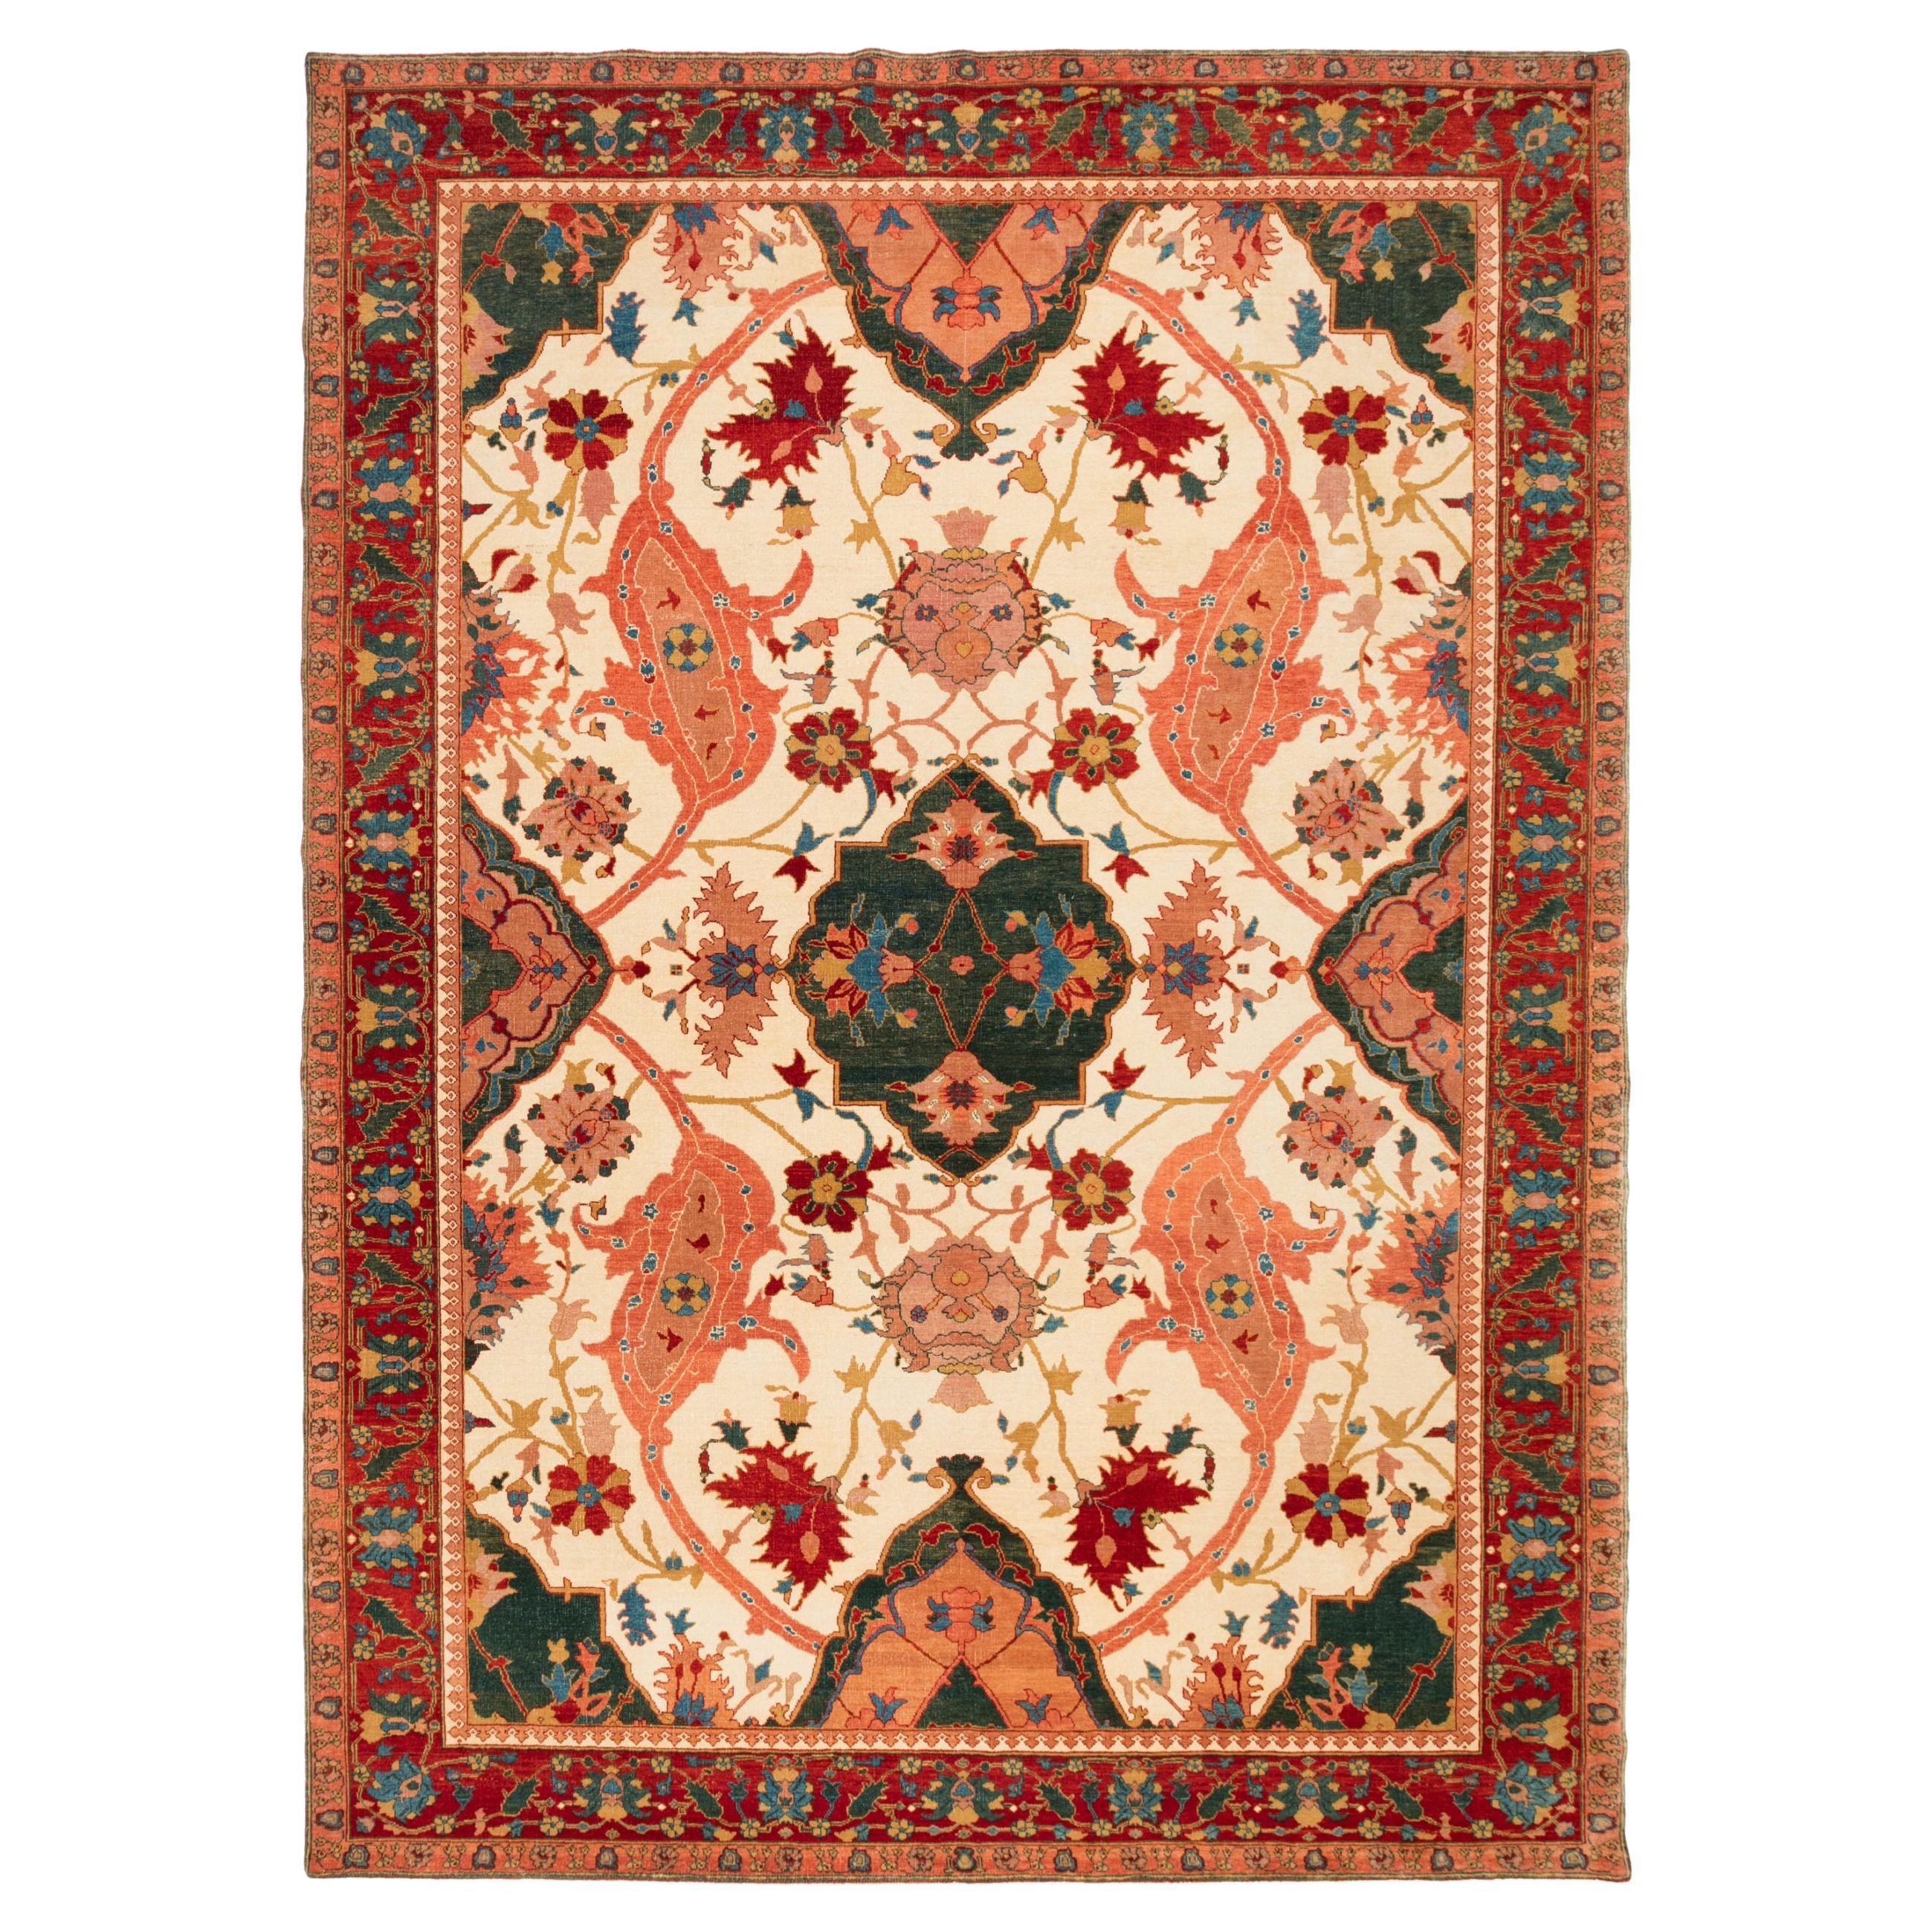 Ararat Rugs Garrus Bidjar Medallion Carpet 19th Century Revive Rug Natural Dyed